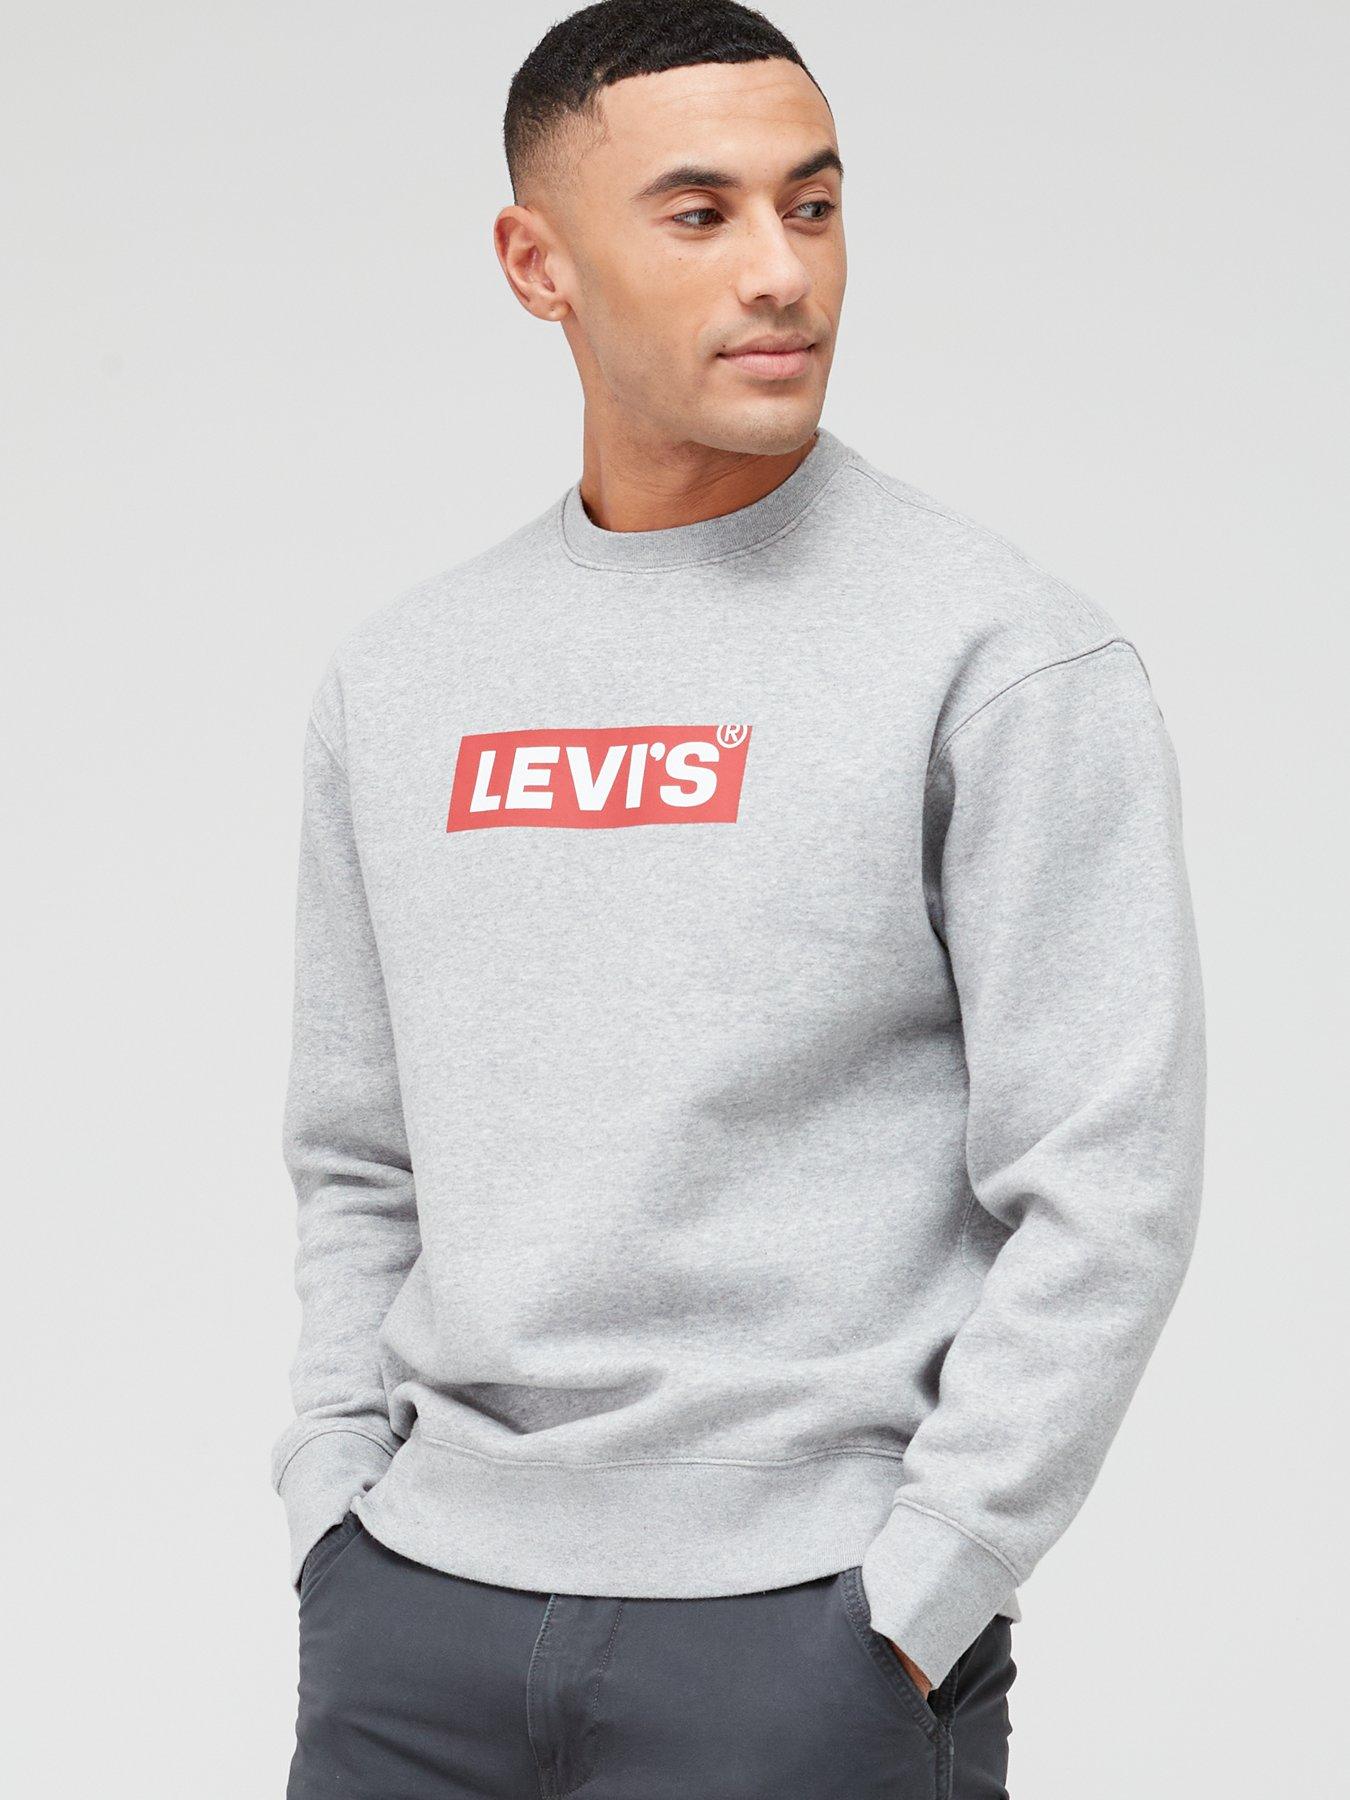 Sweatshirts | Levi's | Hoodies & sweatshirts | Men | Very Ireland